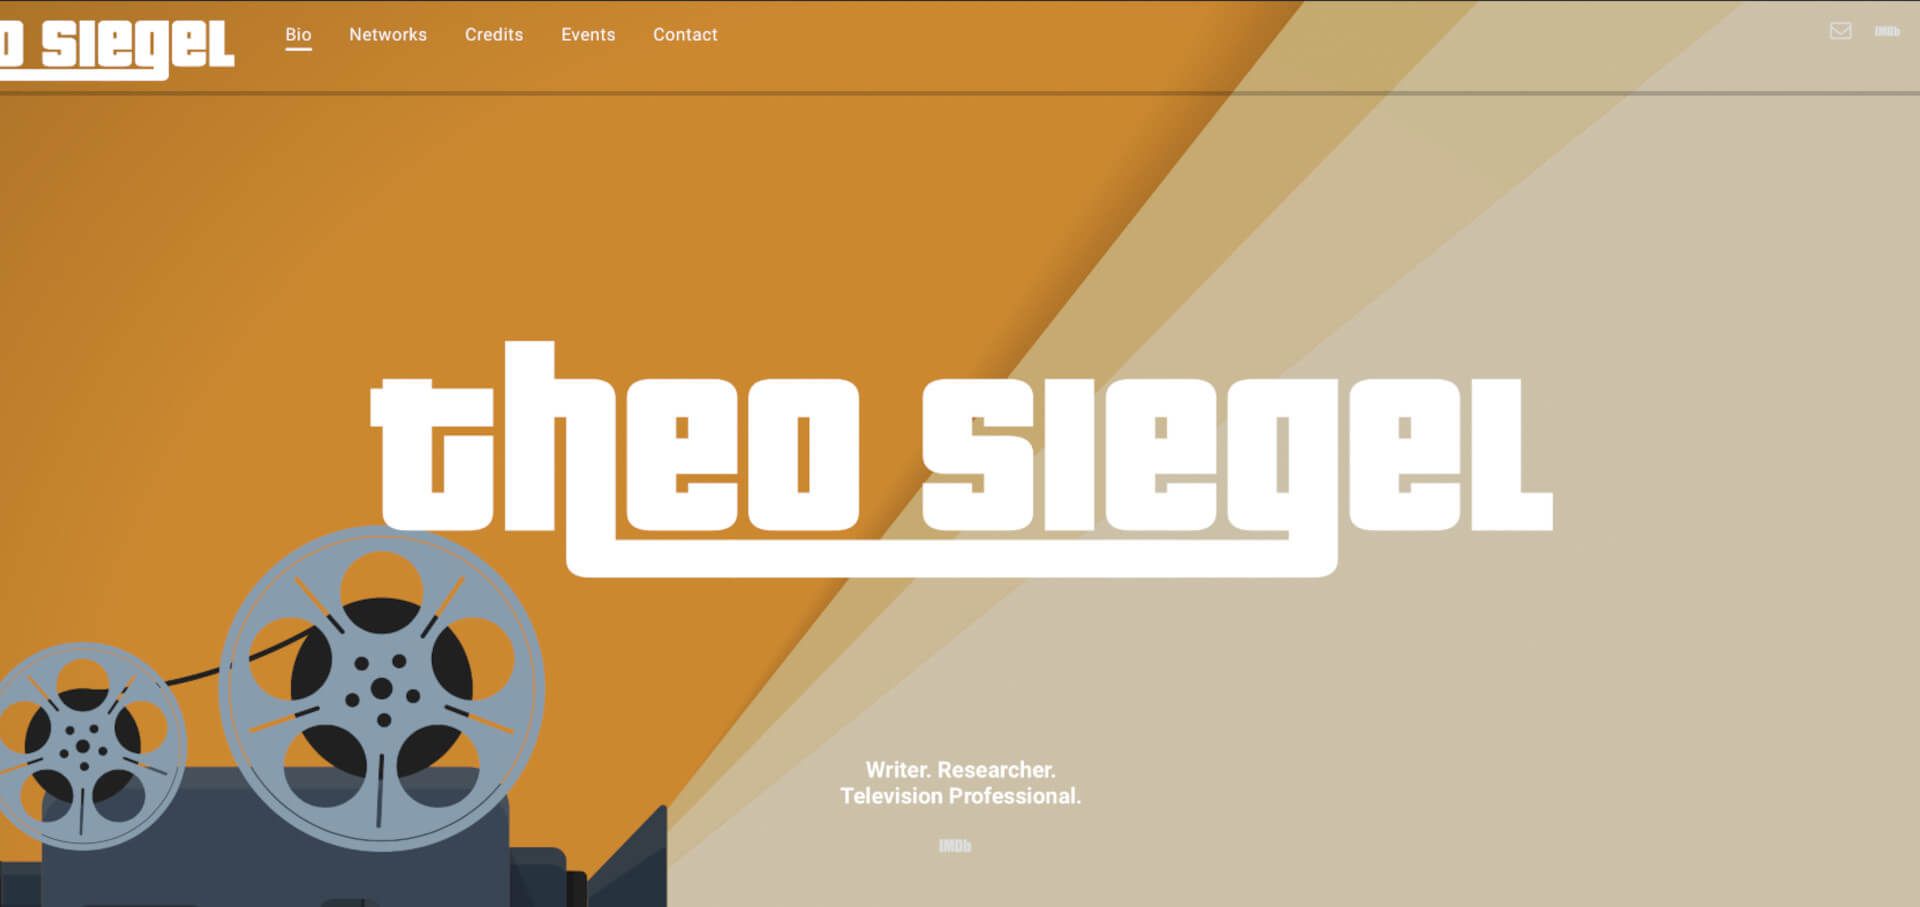 Desktop display of Theo Siegel's website homepage